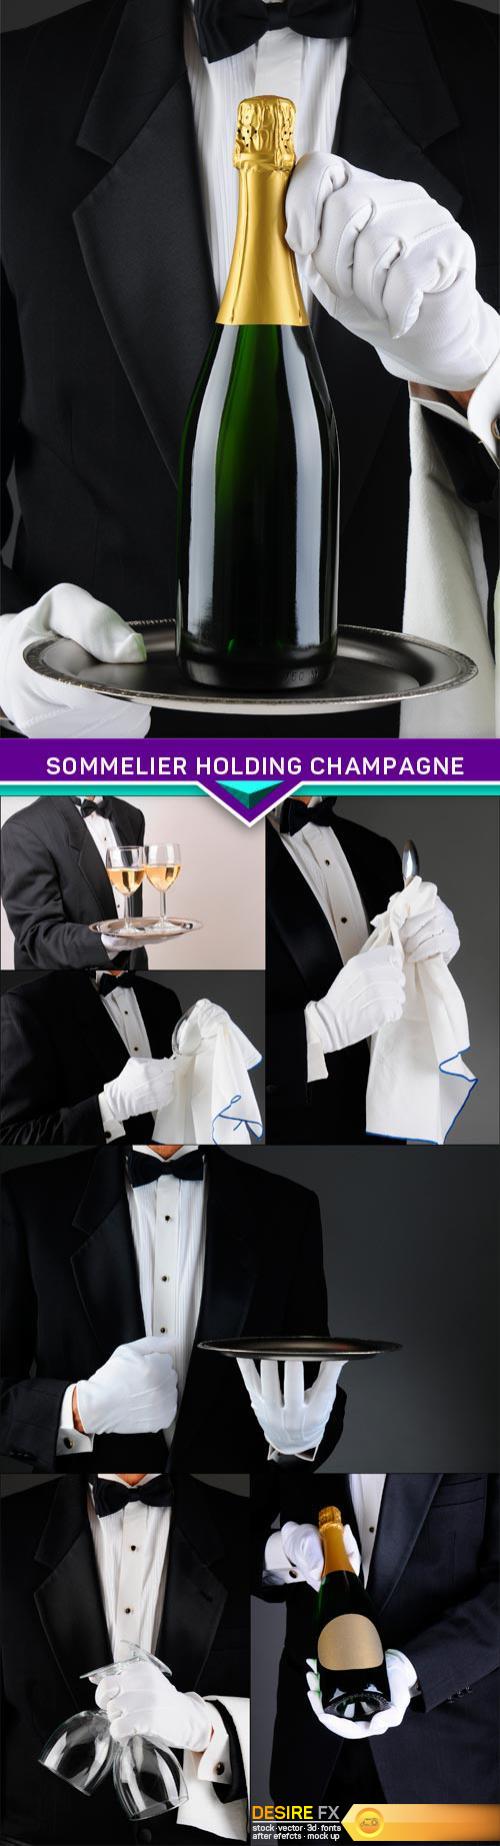 Sommelier Holding Champagne 7X JPEG